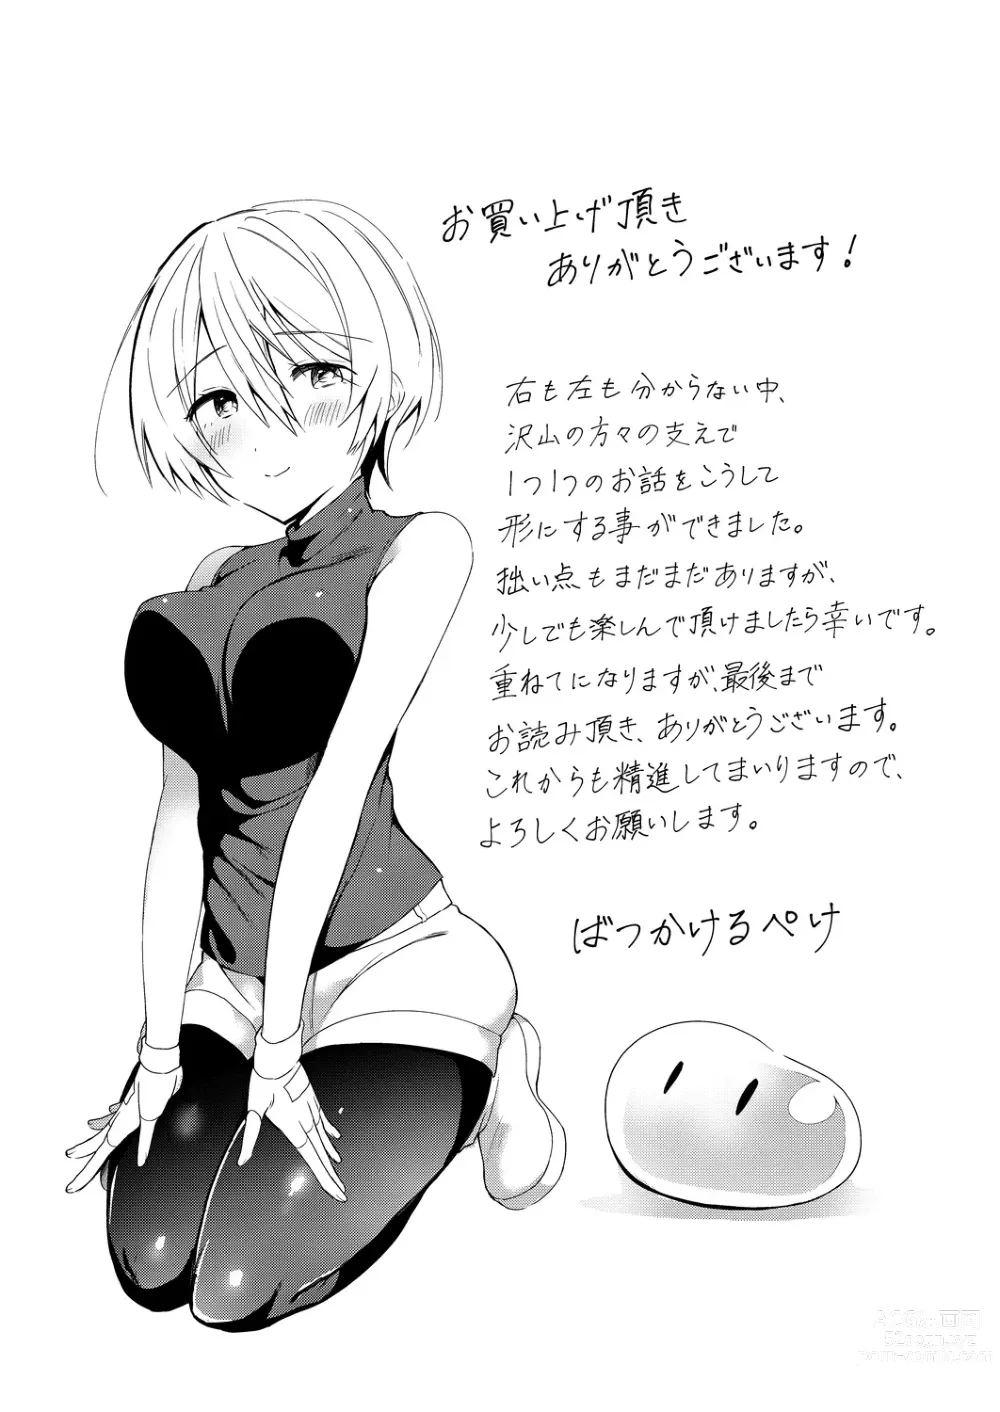 Page 183 of manga Koi-in Rhapsody